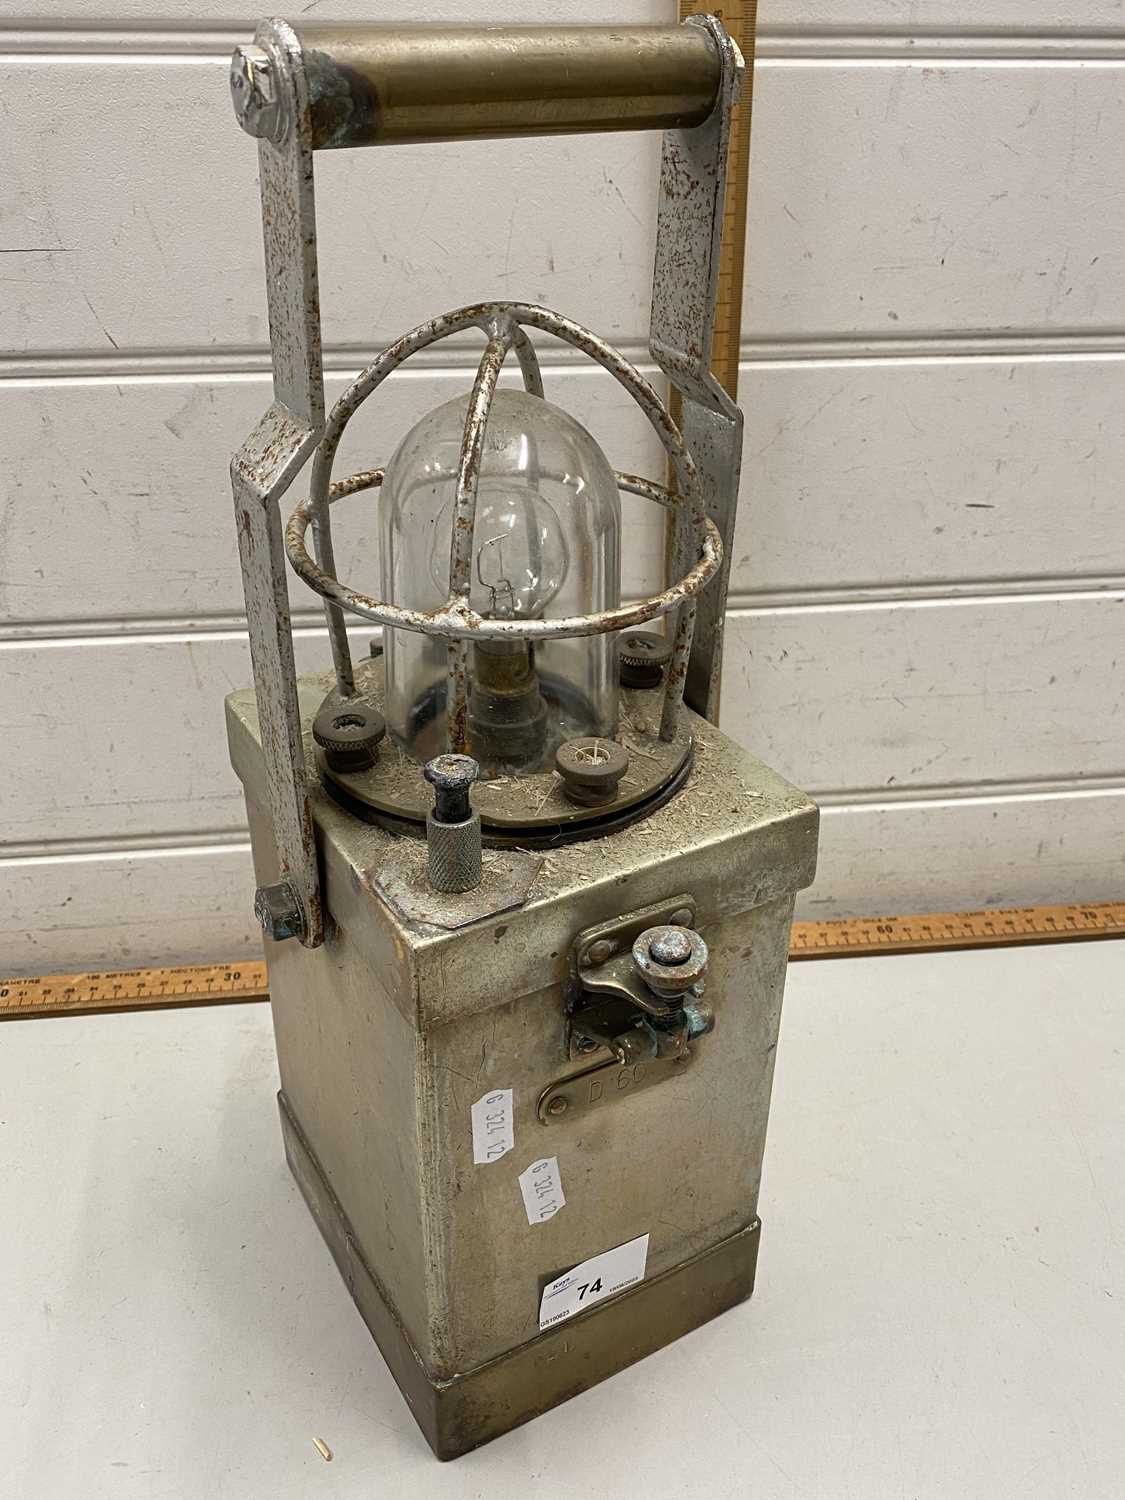 Vintage railway lantern marked 'D60'